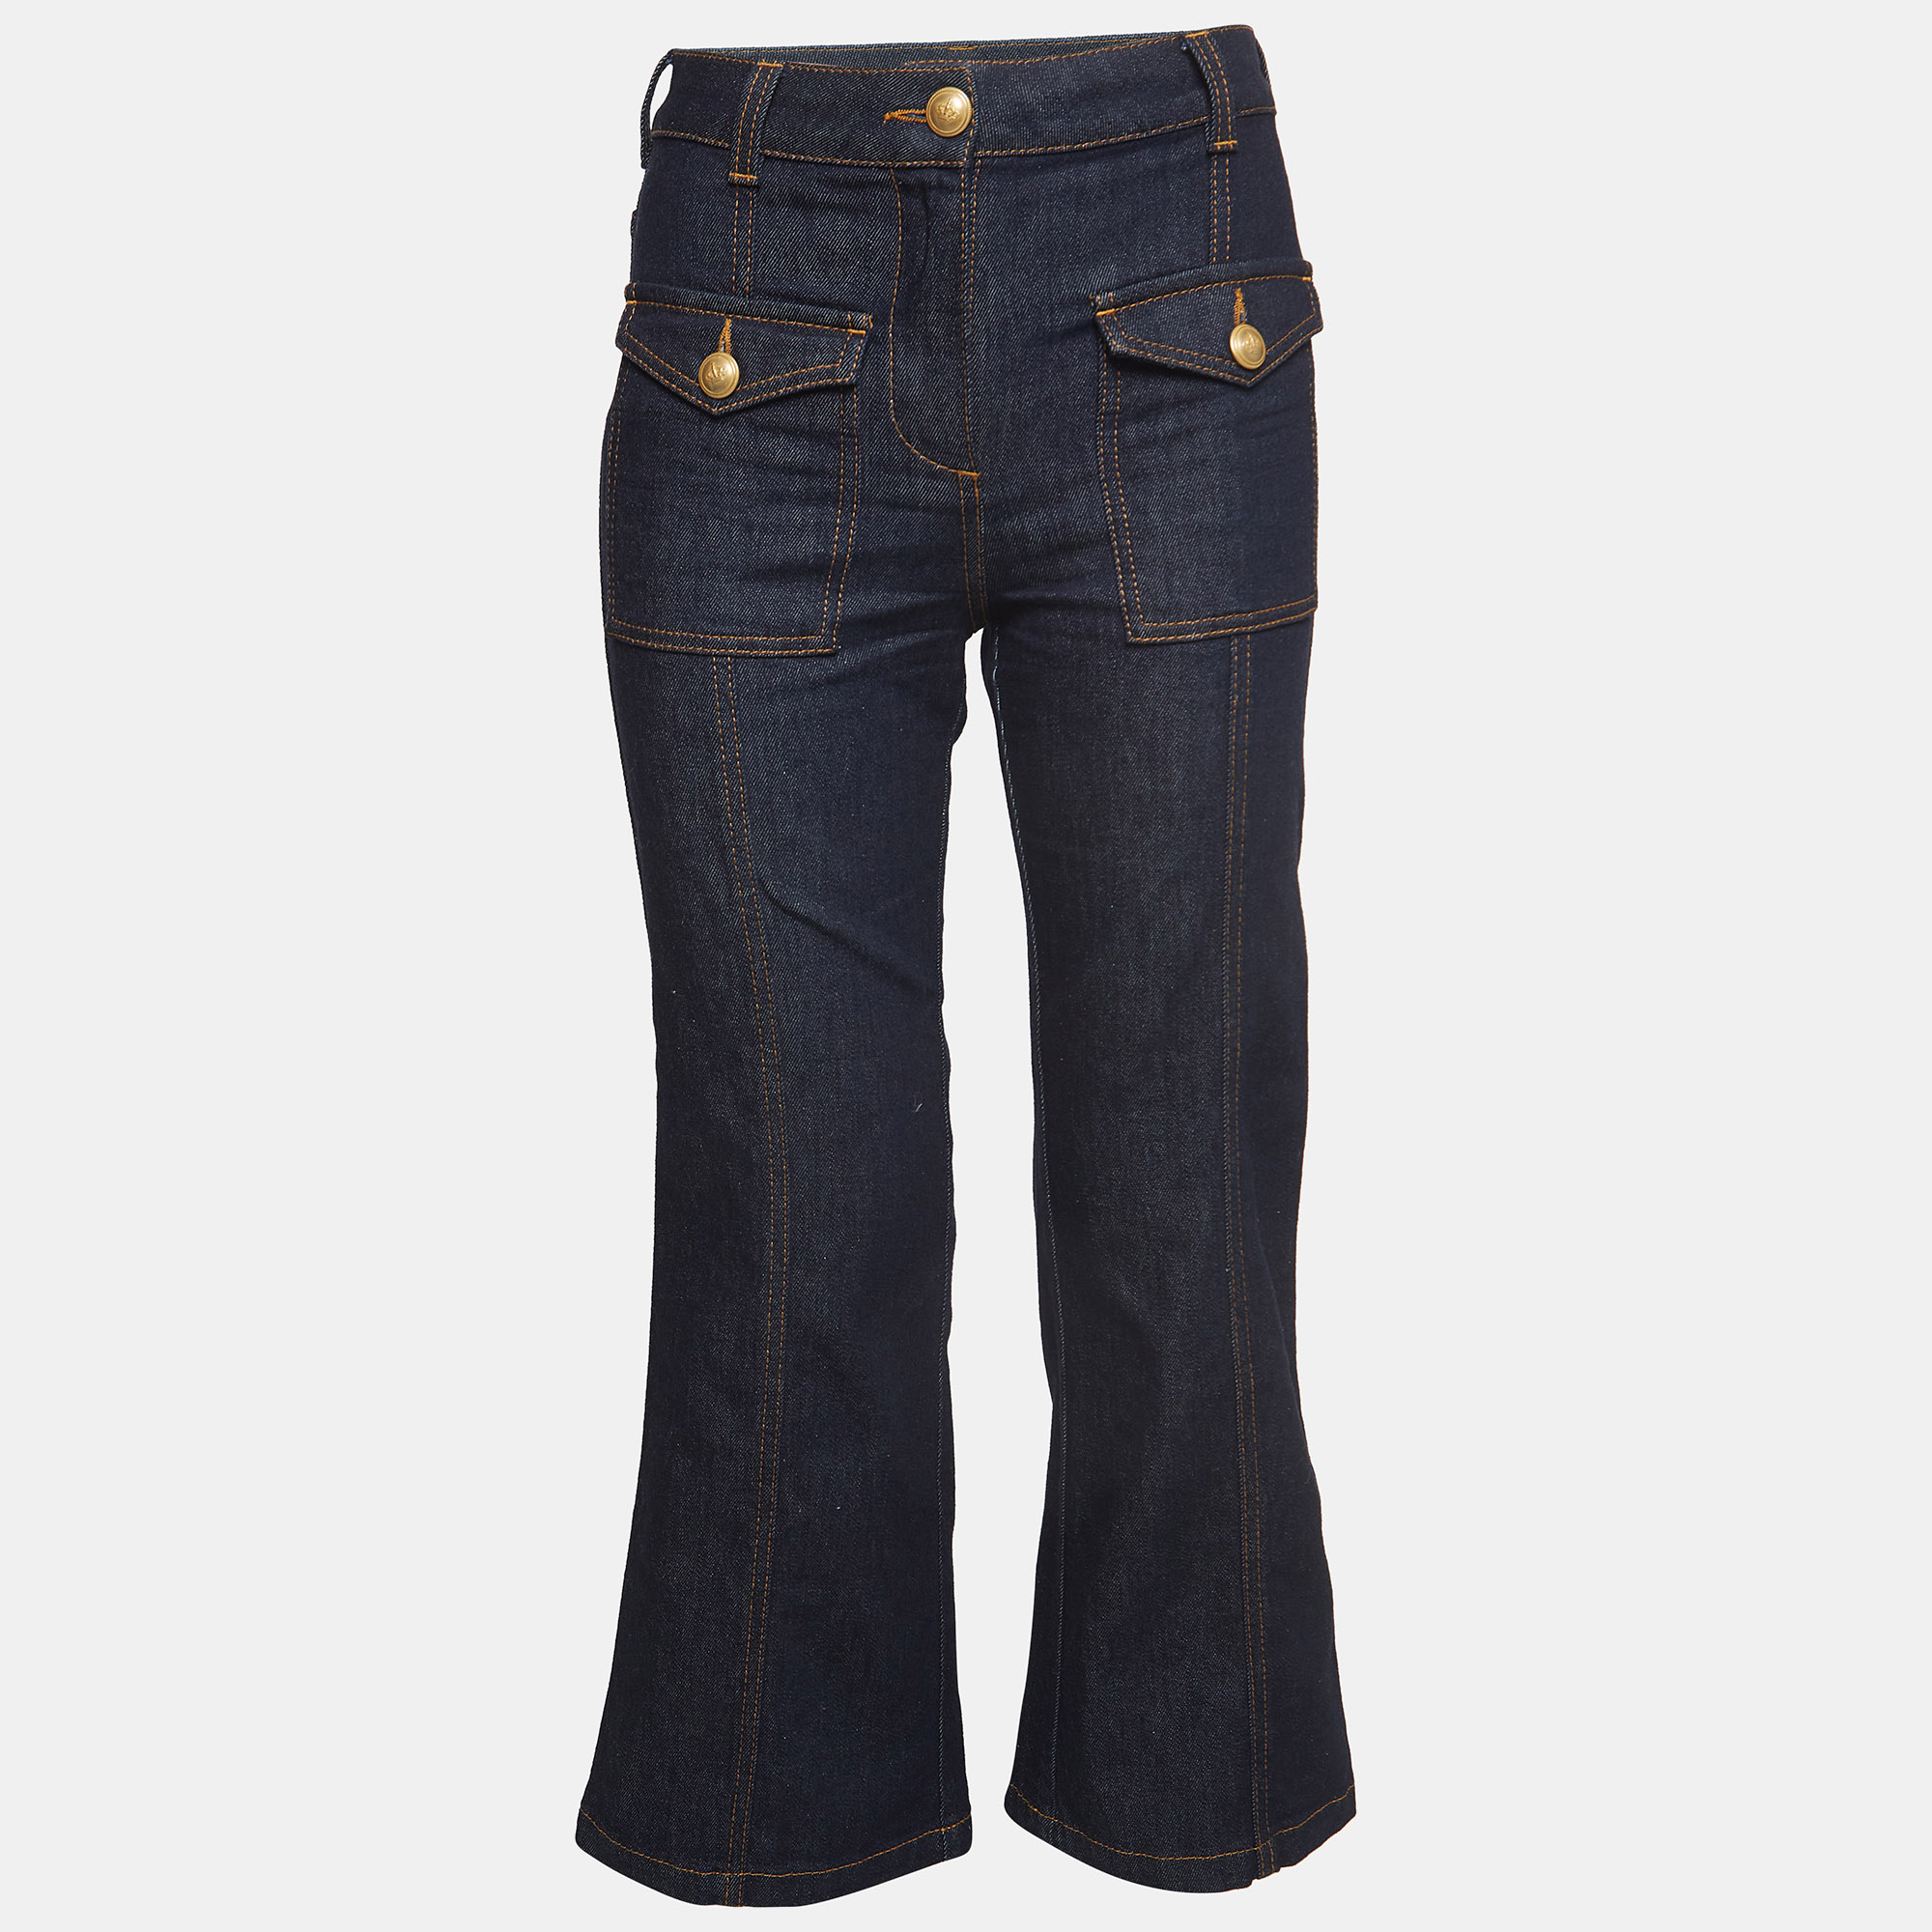 Blue Denim Marine Flare Stretched Jeans S Waist